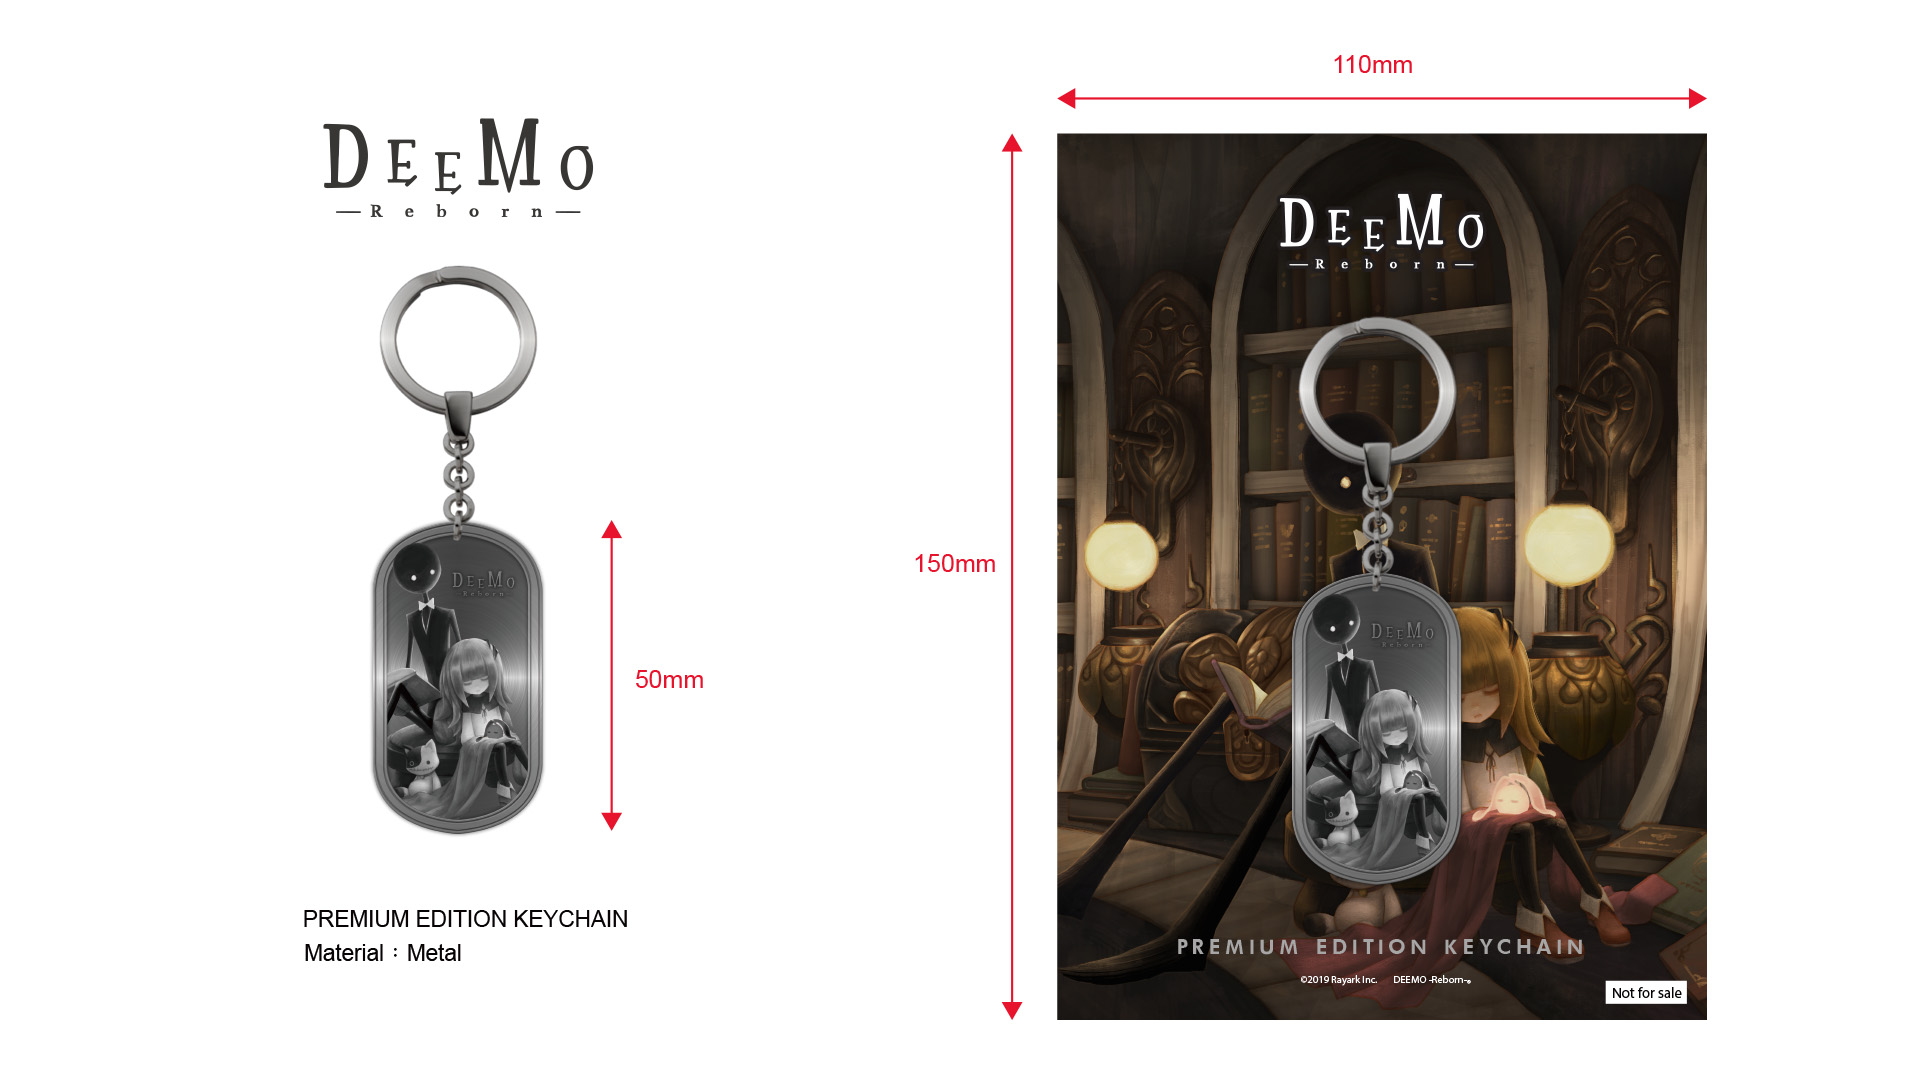 PS4新作《Deemo：重生》將於9月23日開放預購